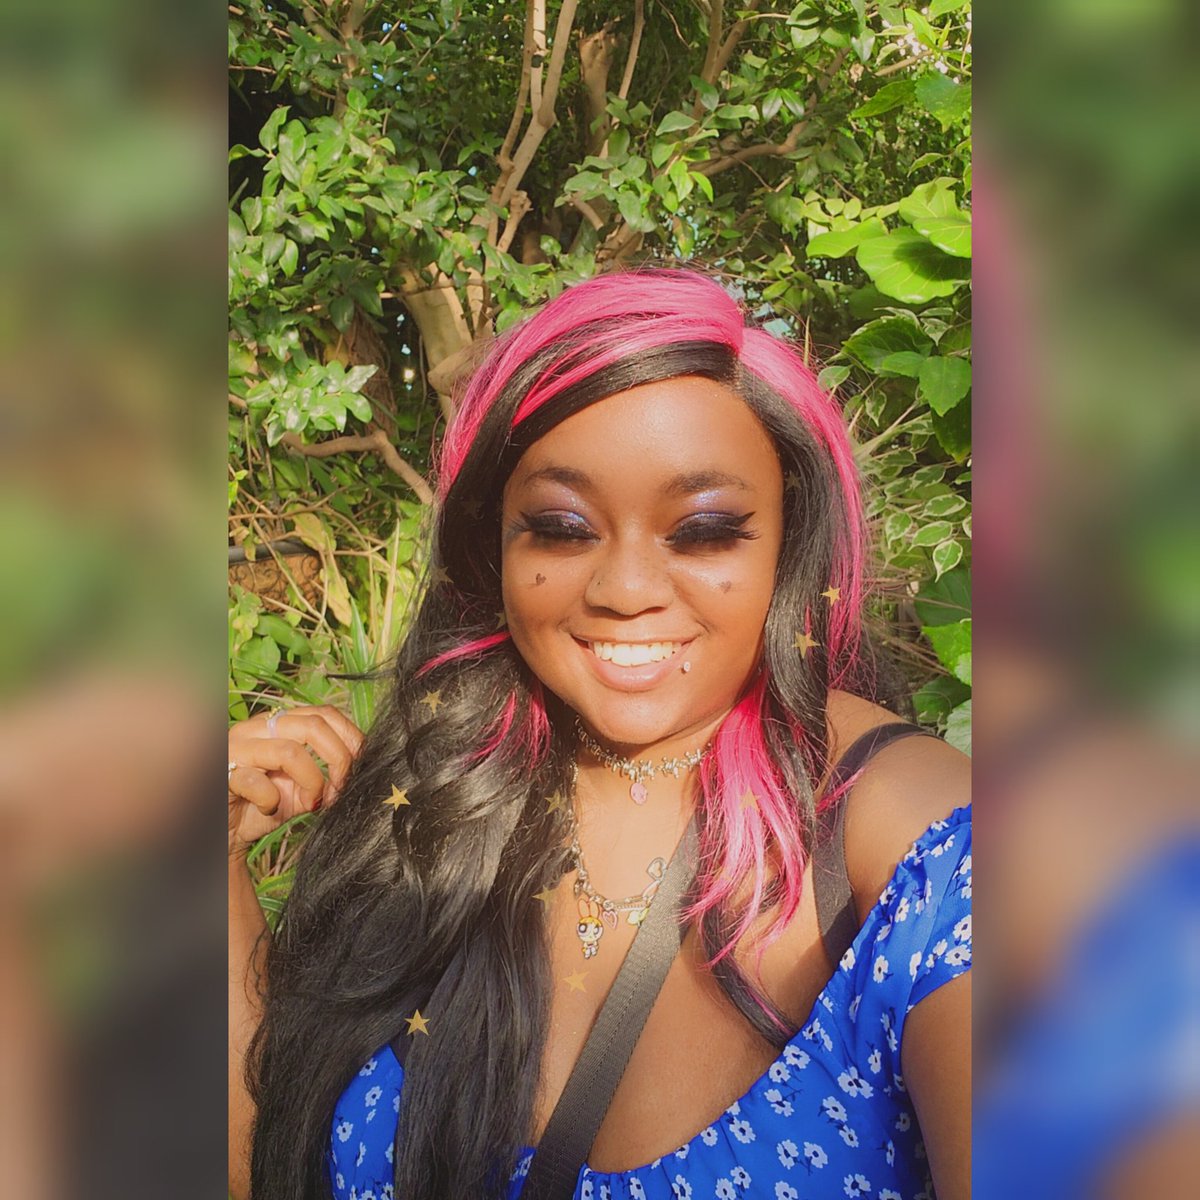 🌳🌿💚
#nymph #pinkandblackhair #chunkyhighlights #altgirl #makeup #piercing #trees #greenhouse #plants #plantlife #smile #gorgeous #summer #witchythings #goddessenergy